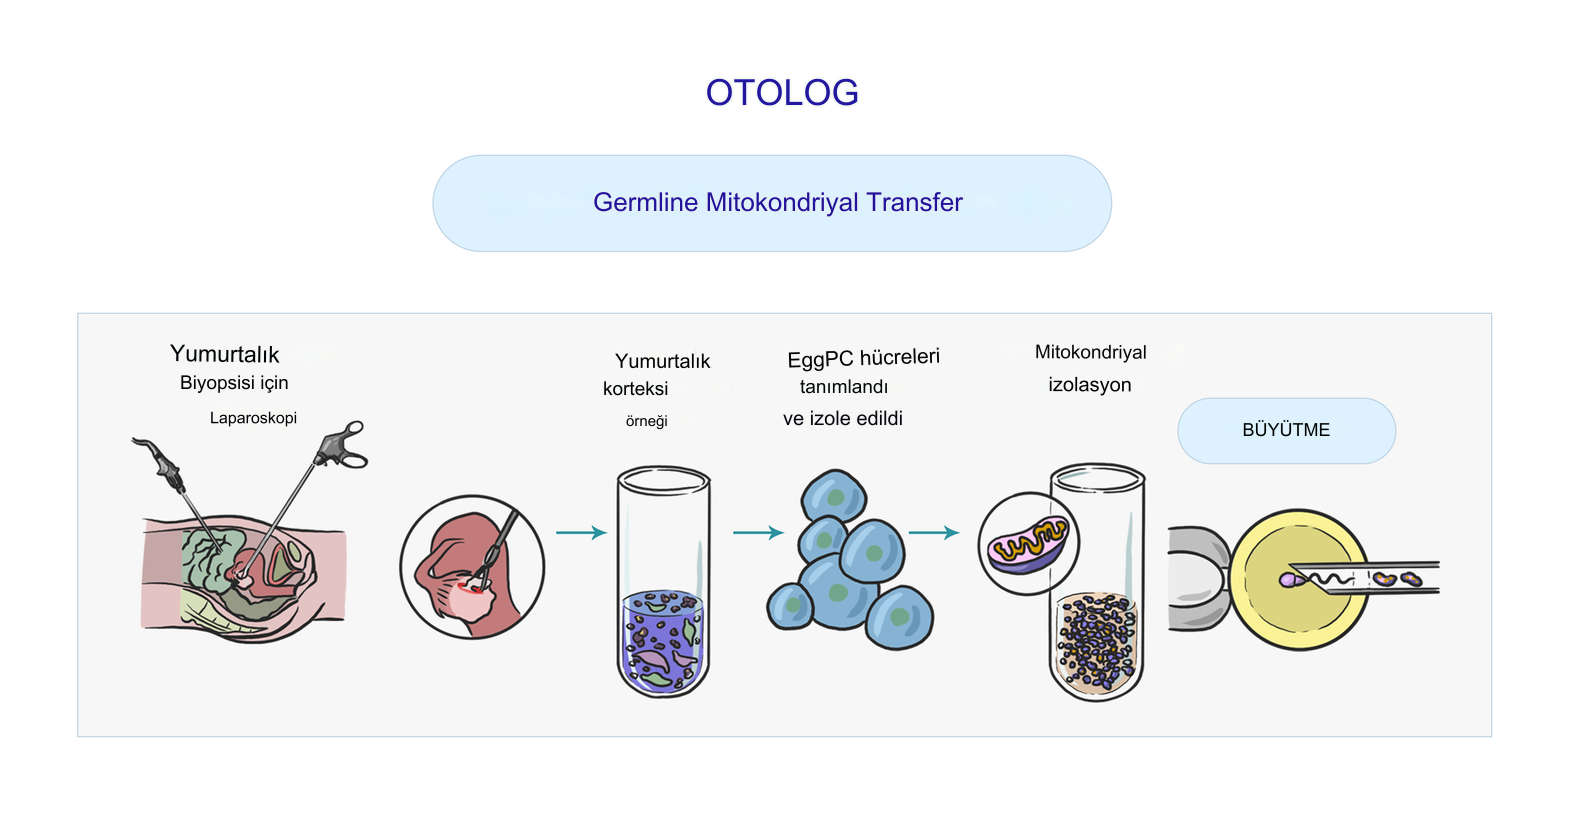 Otolog Mitokondriyal Transfer Nedir?